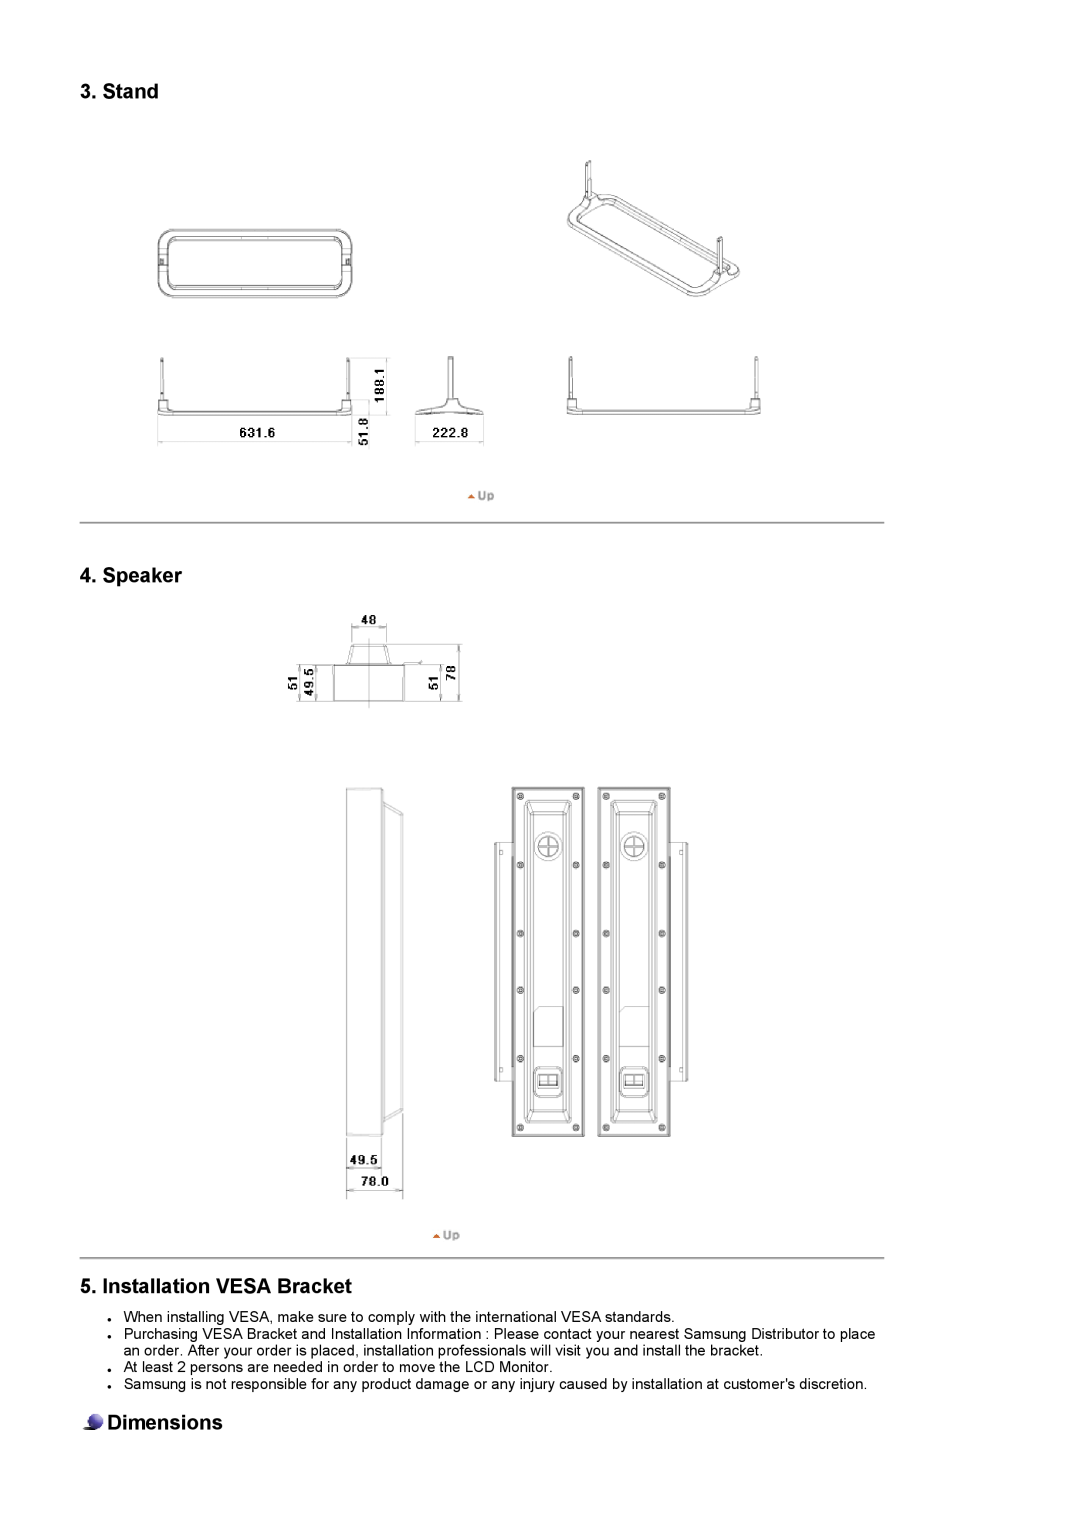 Samsung 320P manual Stand 4. Speaker 5. Installation VESA Bracket, Dimensions 